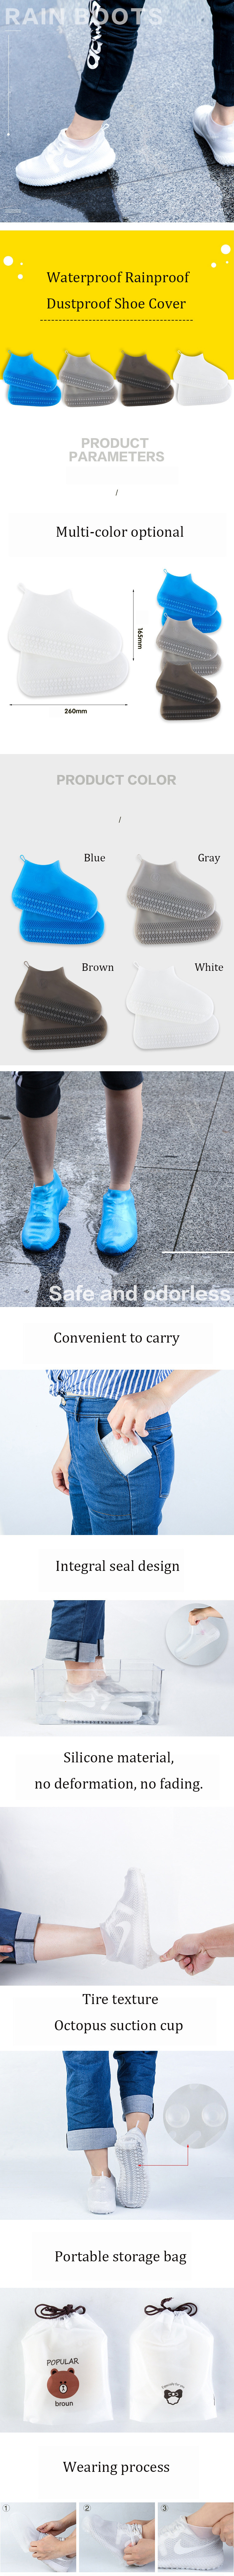 Silicone-Shoe-Covers-Outdoor-Waterproof-Rainproof-Dustproof-Shoe-Cover-Skid-Thickening-Wear-resistin-1531238-1